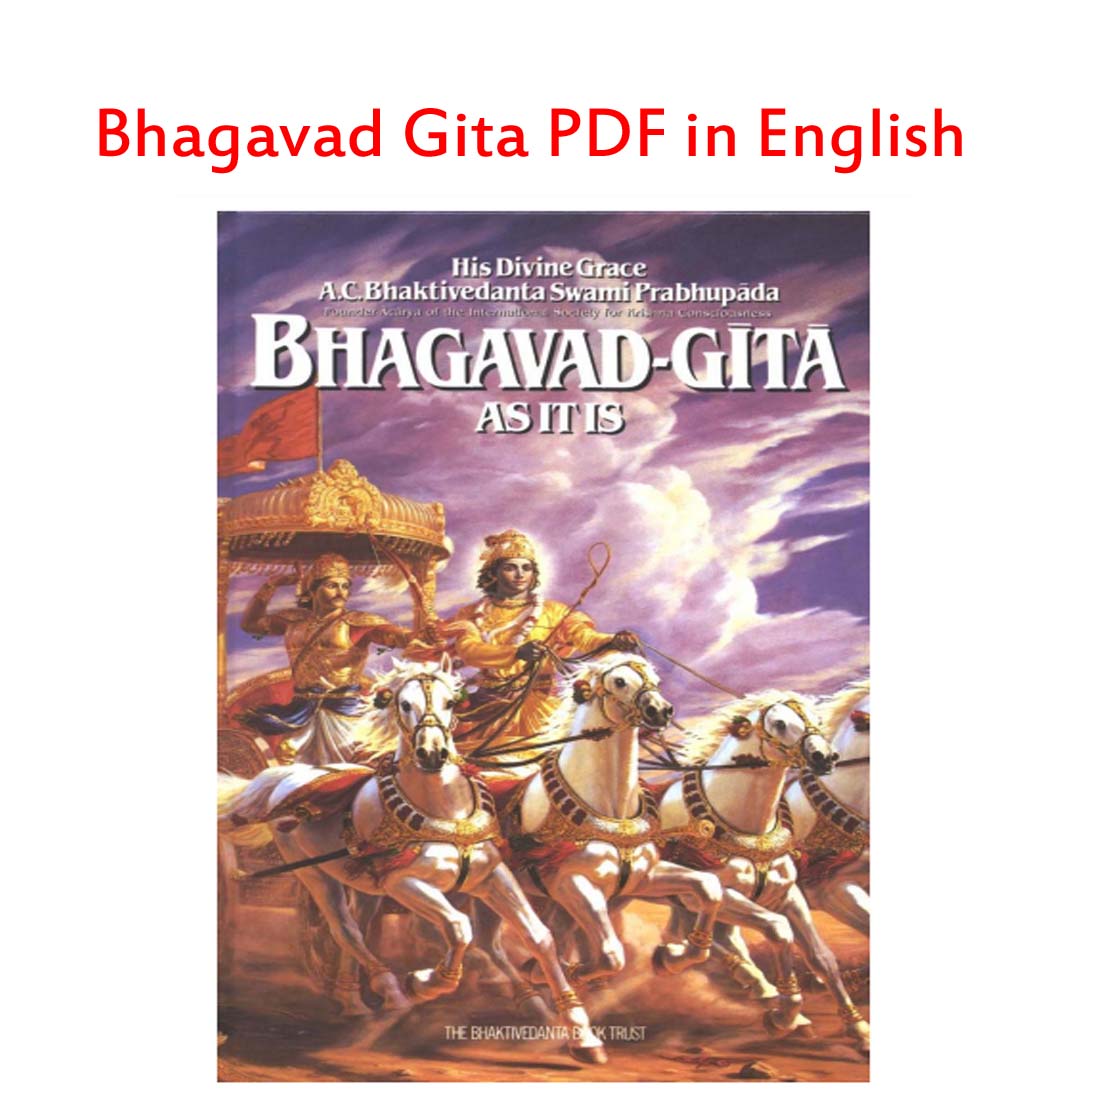 Bhagavad Gita PDF in English preview image.